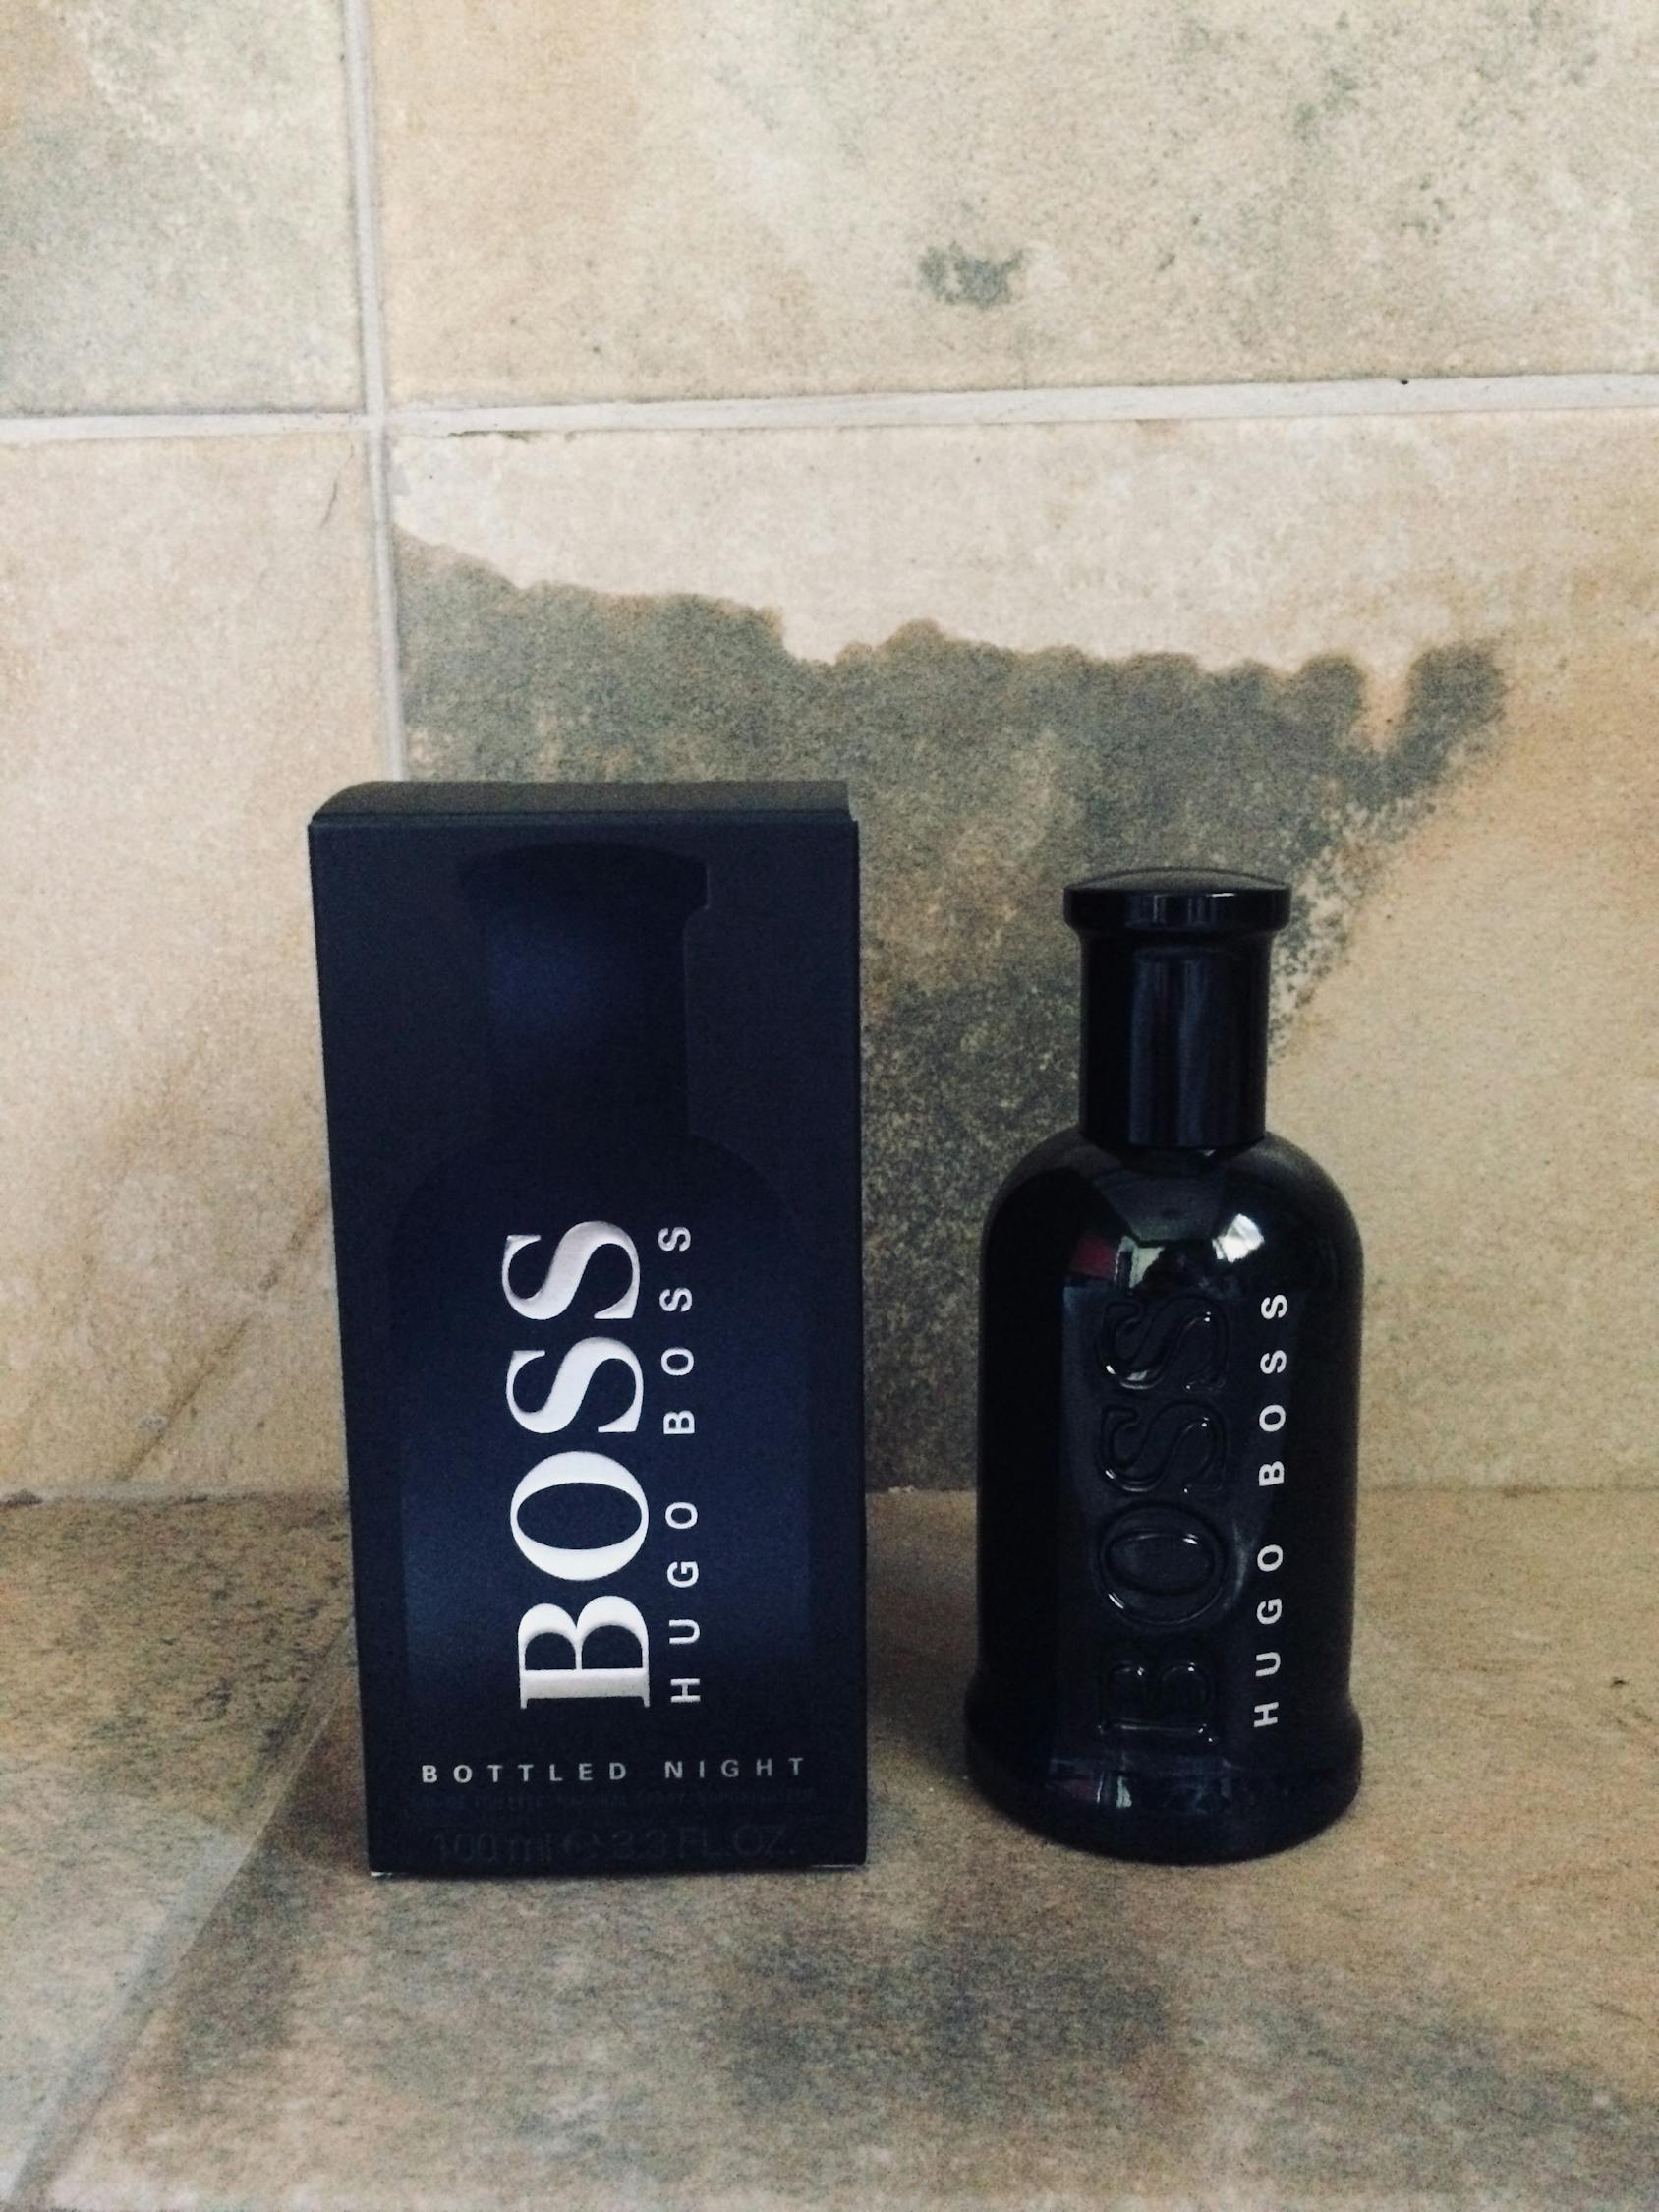 Free stock photo of Hugo Boss fragrance